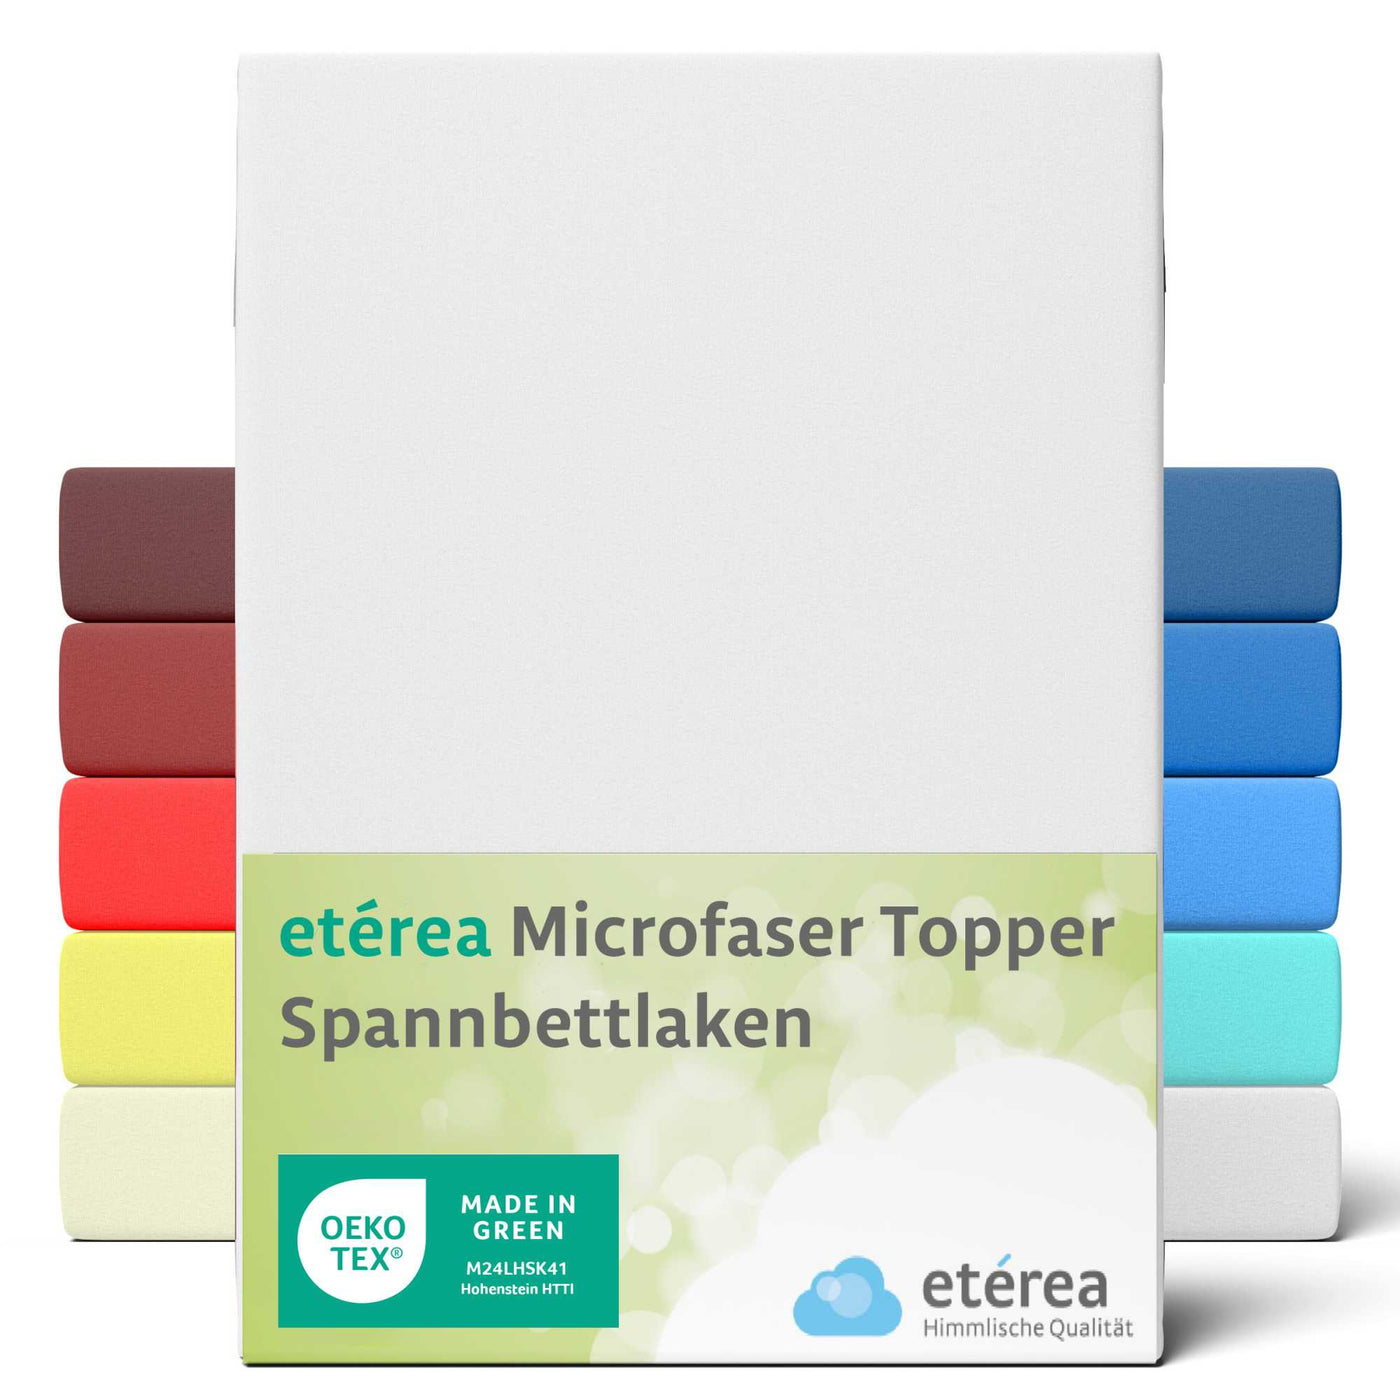 etérea Microfaser Topper Spannbettlaken #farbe_weiss